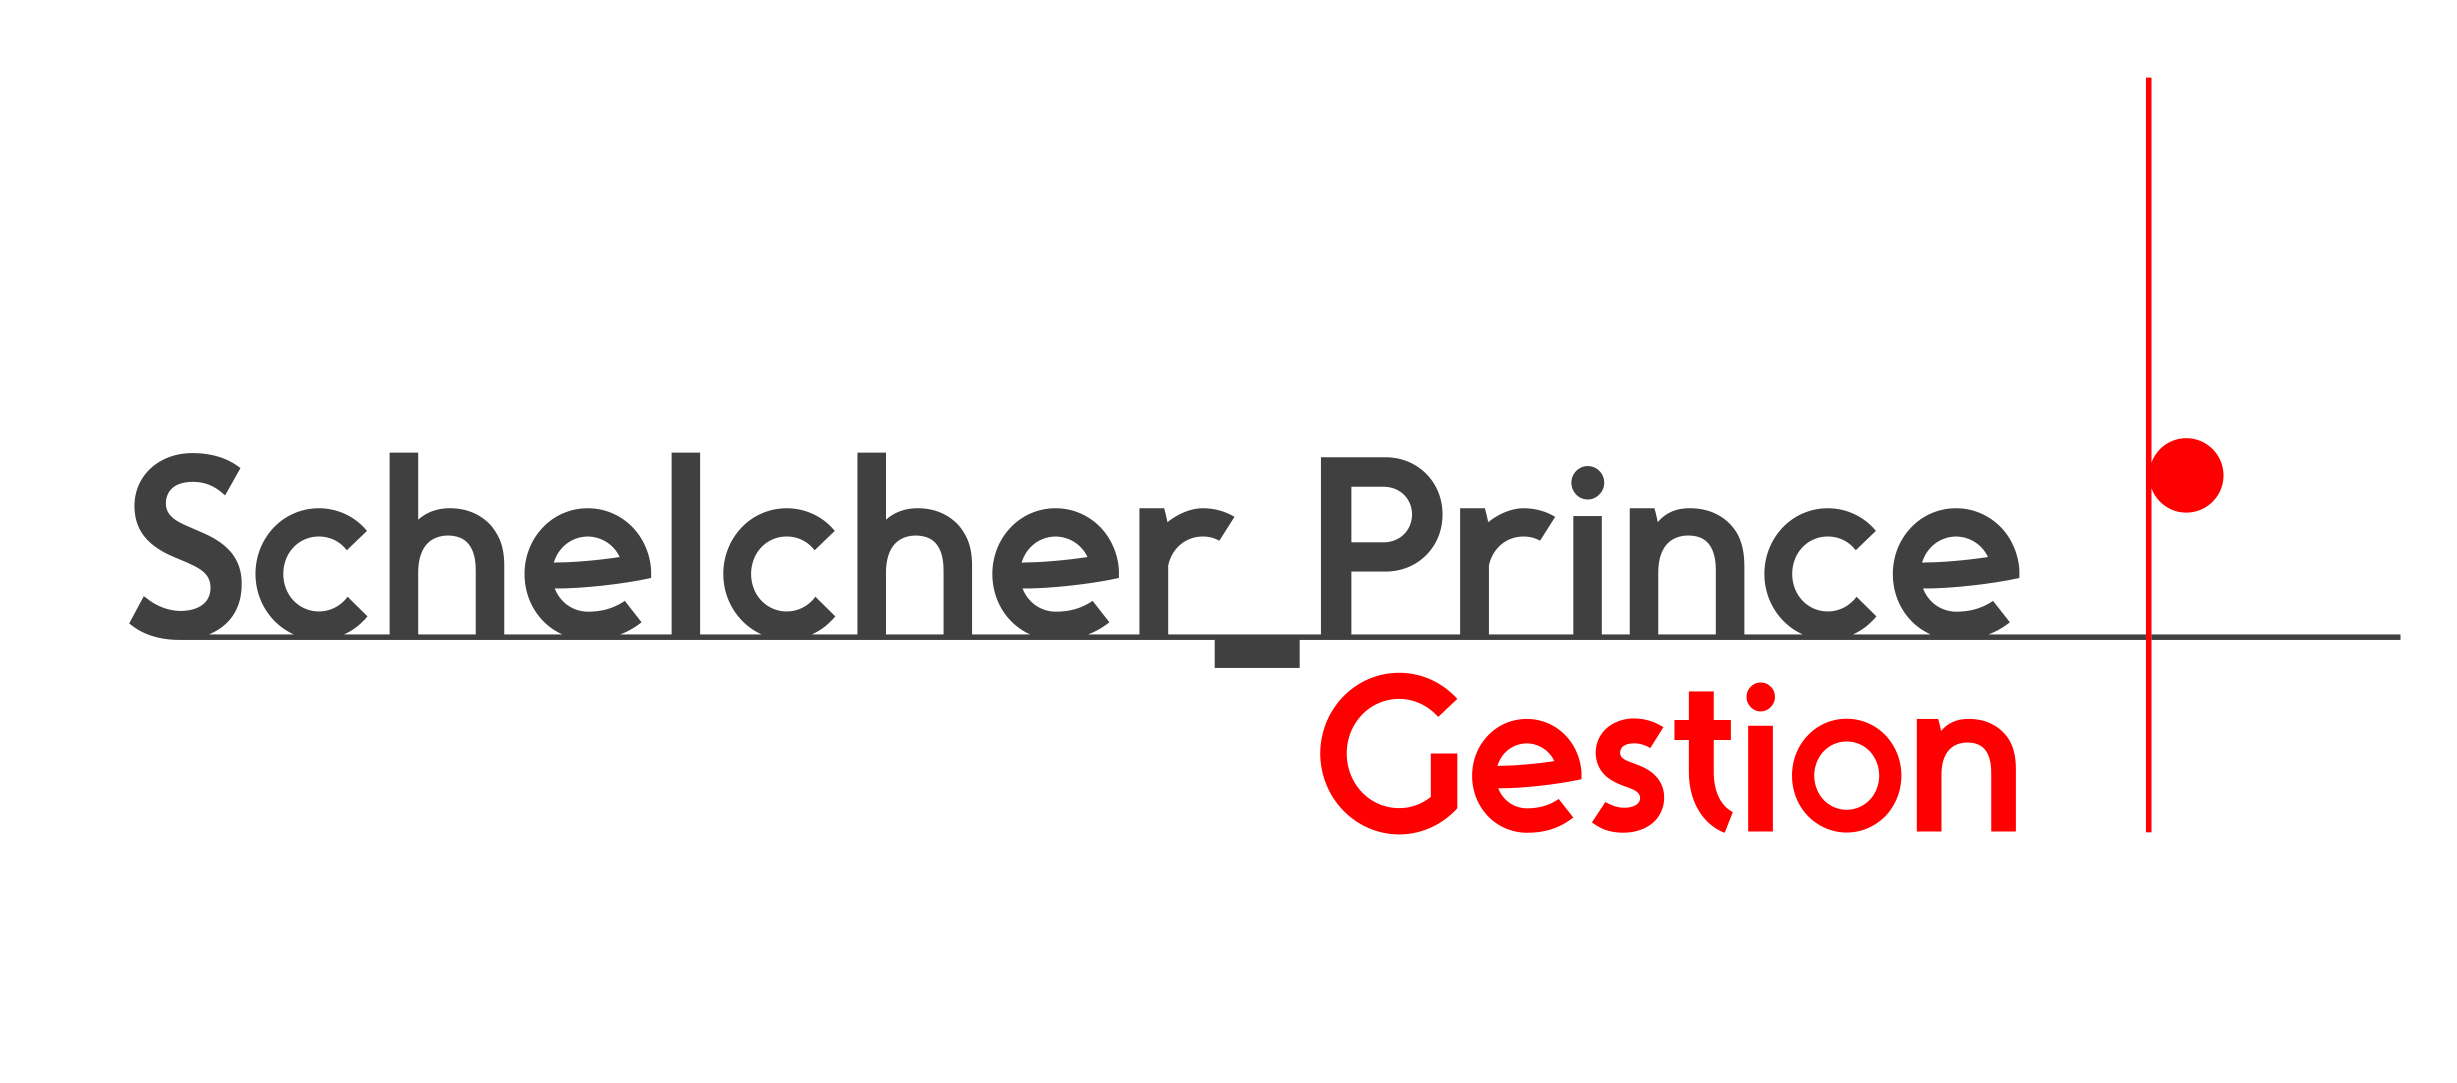  E01 CMA Logo SCHELCHER PRINCE ED SsSign QUADRI